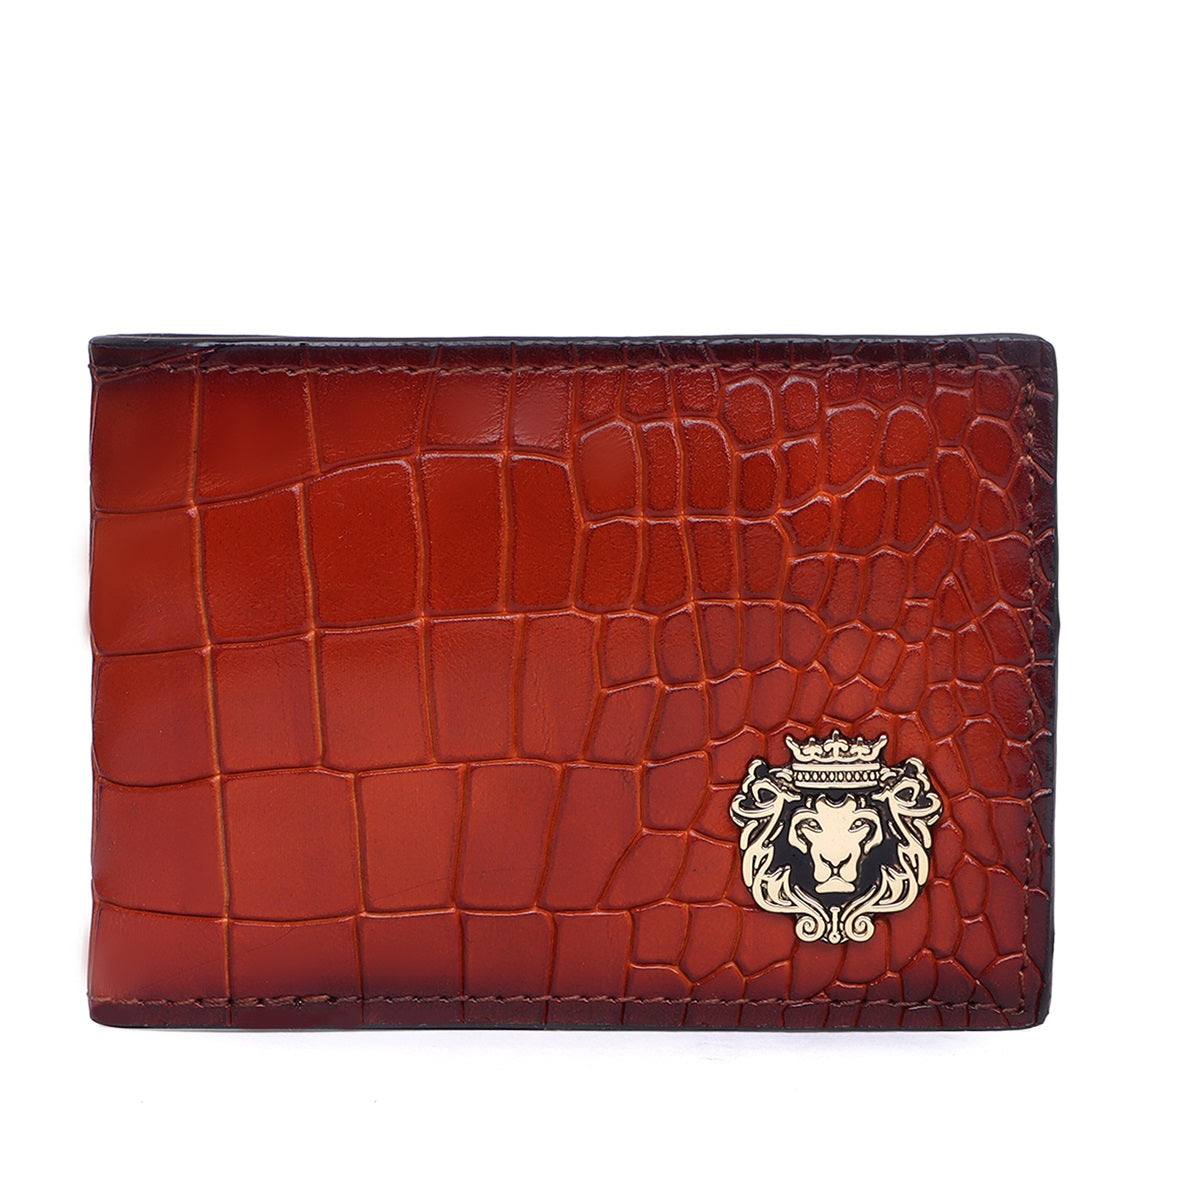 Men's Tan Bi-Fold Wallet in Deep Cut Croco Textured Leather